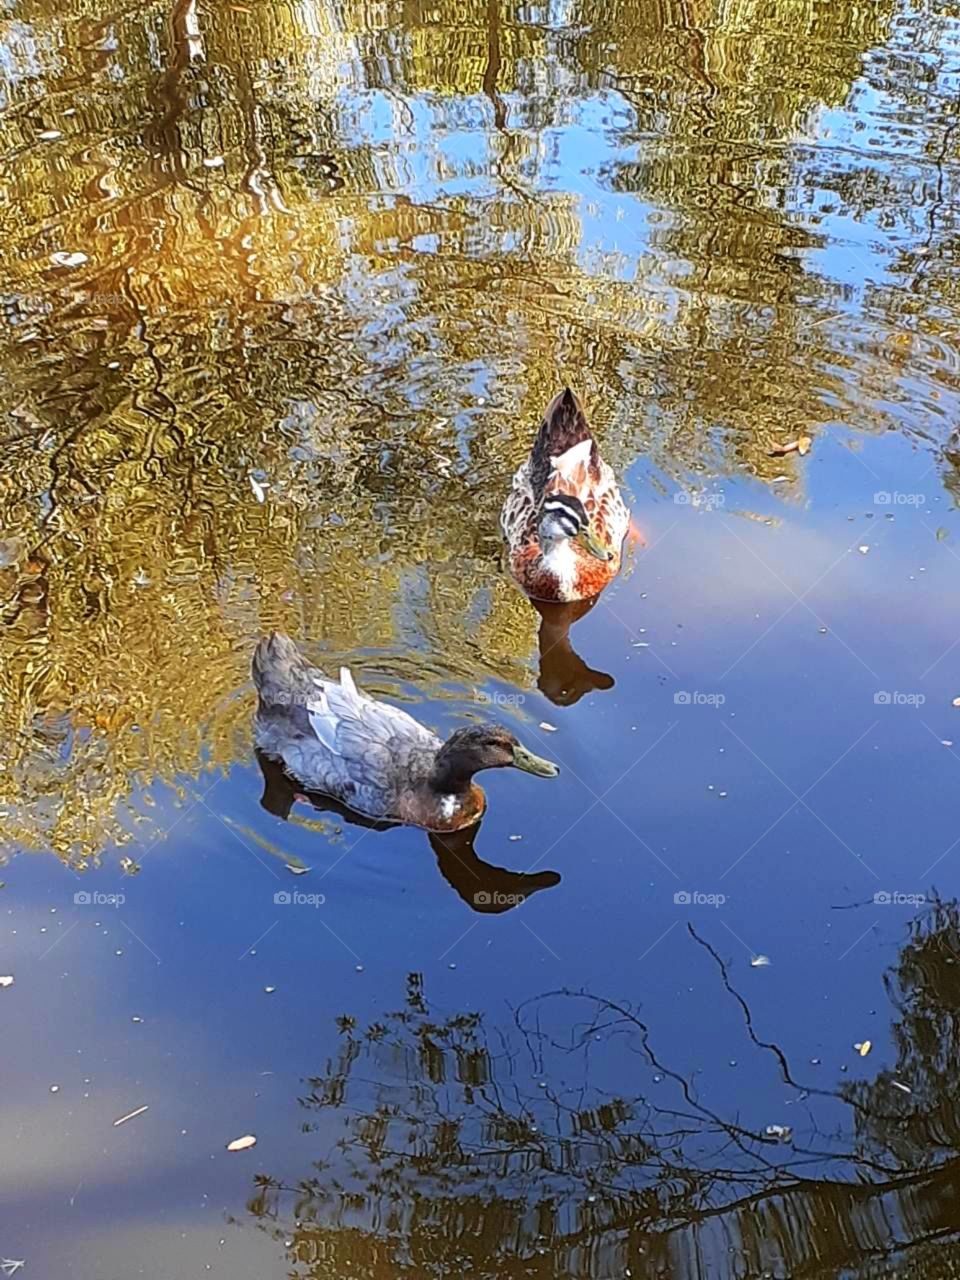 The ducks